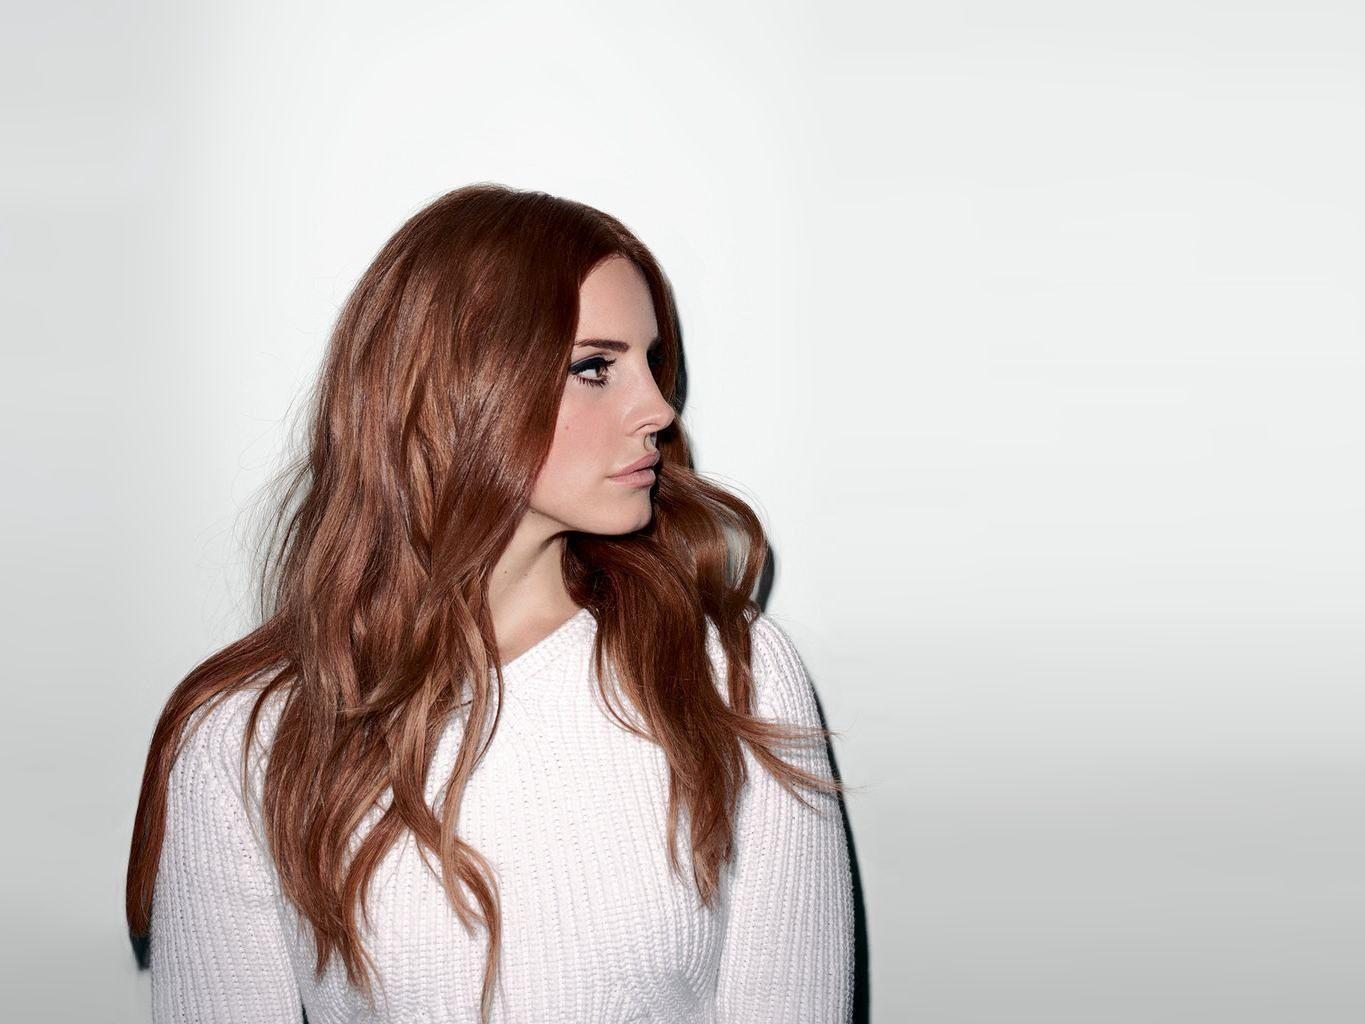 Lana Del Rey wallpapers - wallpapers free download.